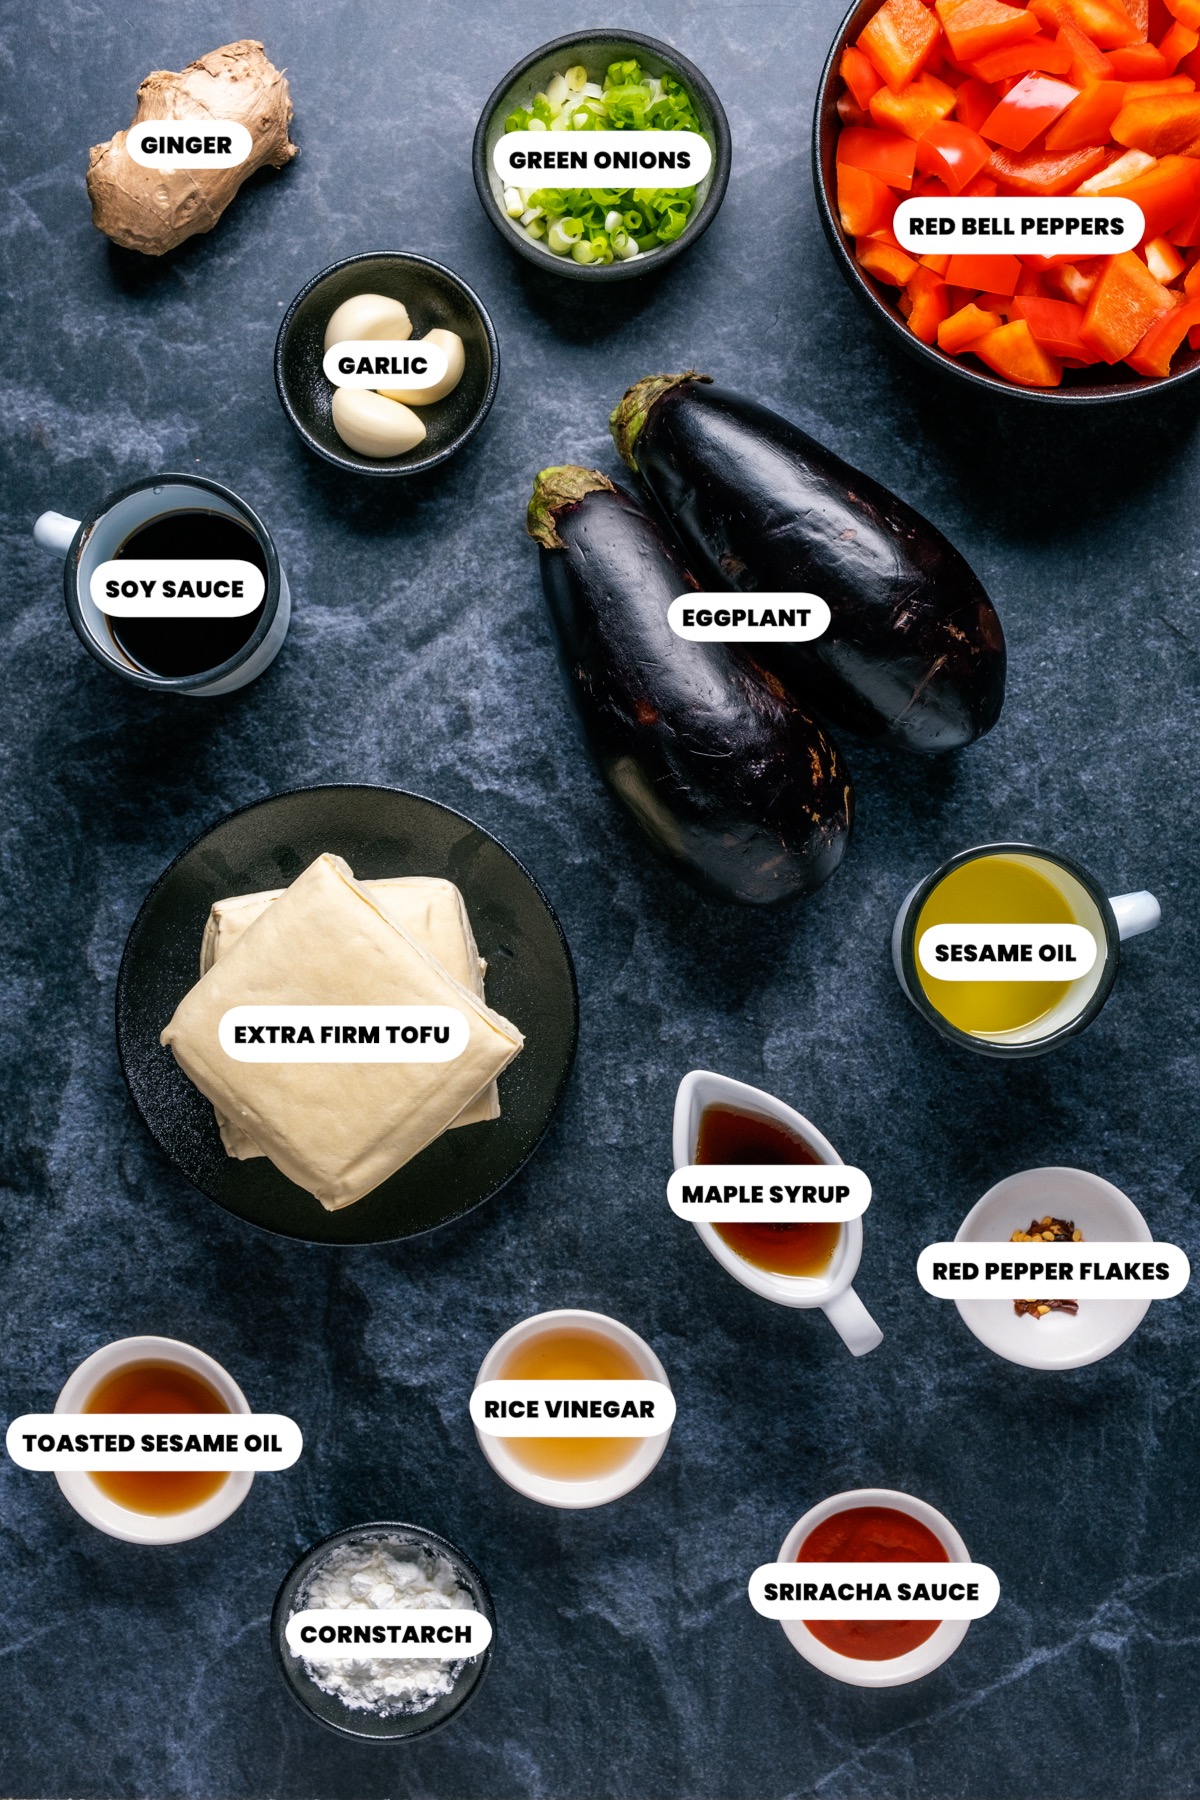 Ingredients for eggplant tofu stir fry.